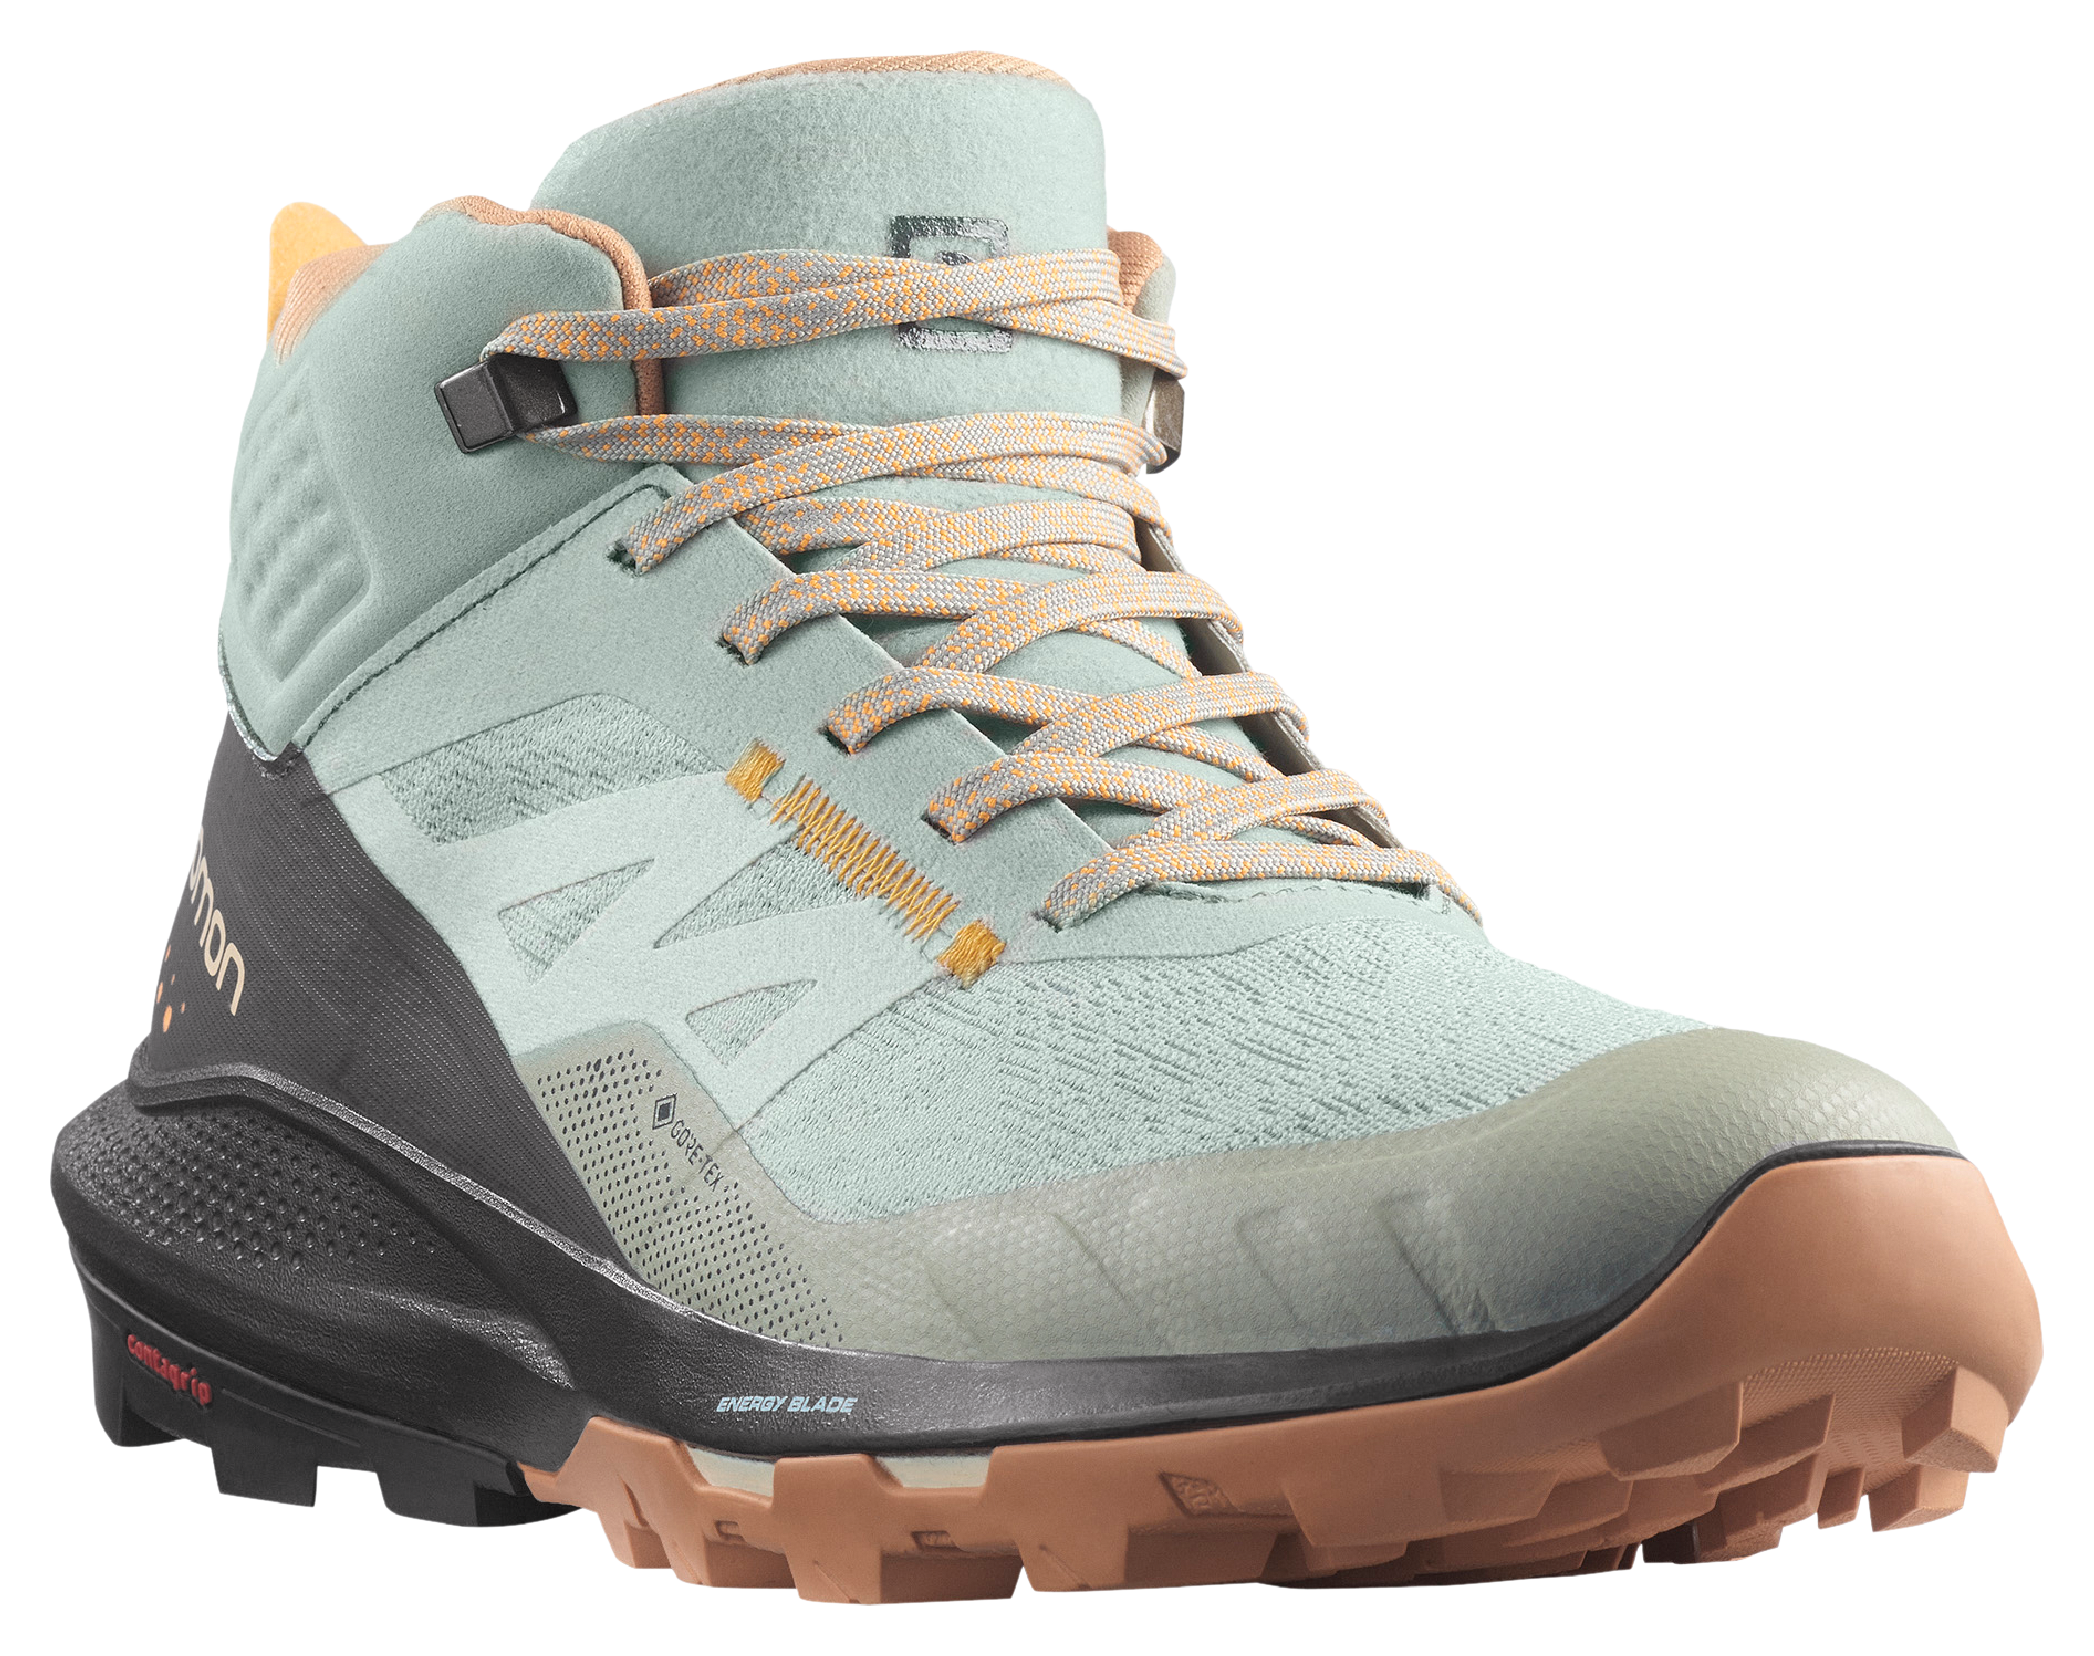 Salomon Outpulse Mid GORE-TEX Hiking Boots for Ladies - Wrought Iron/Ebony/Blaze Orange - 10M